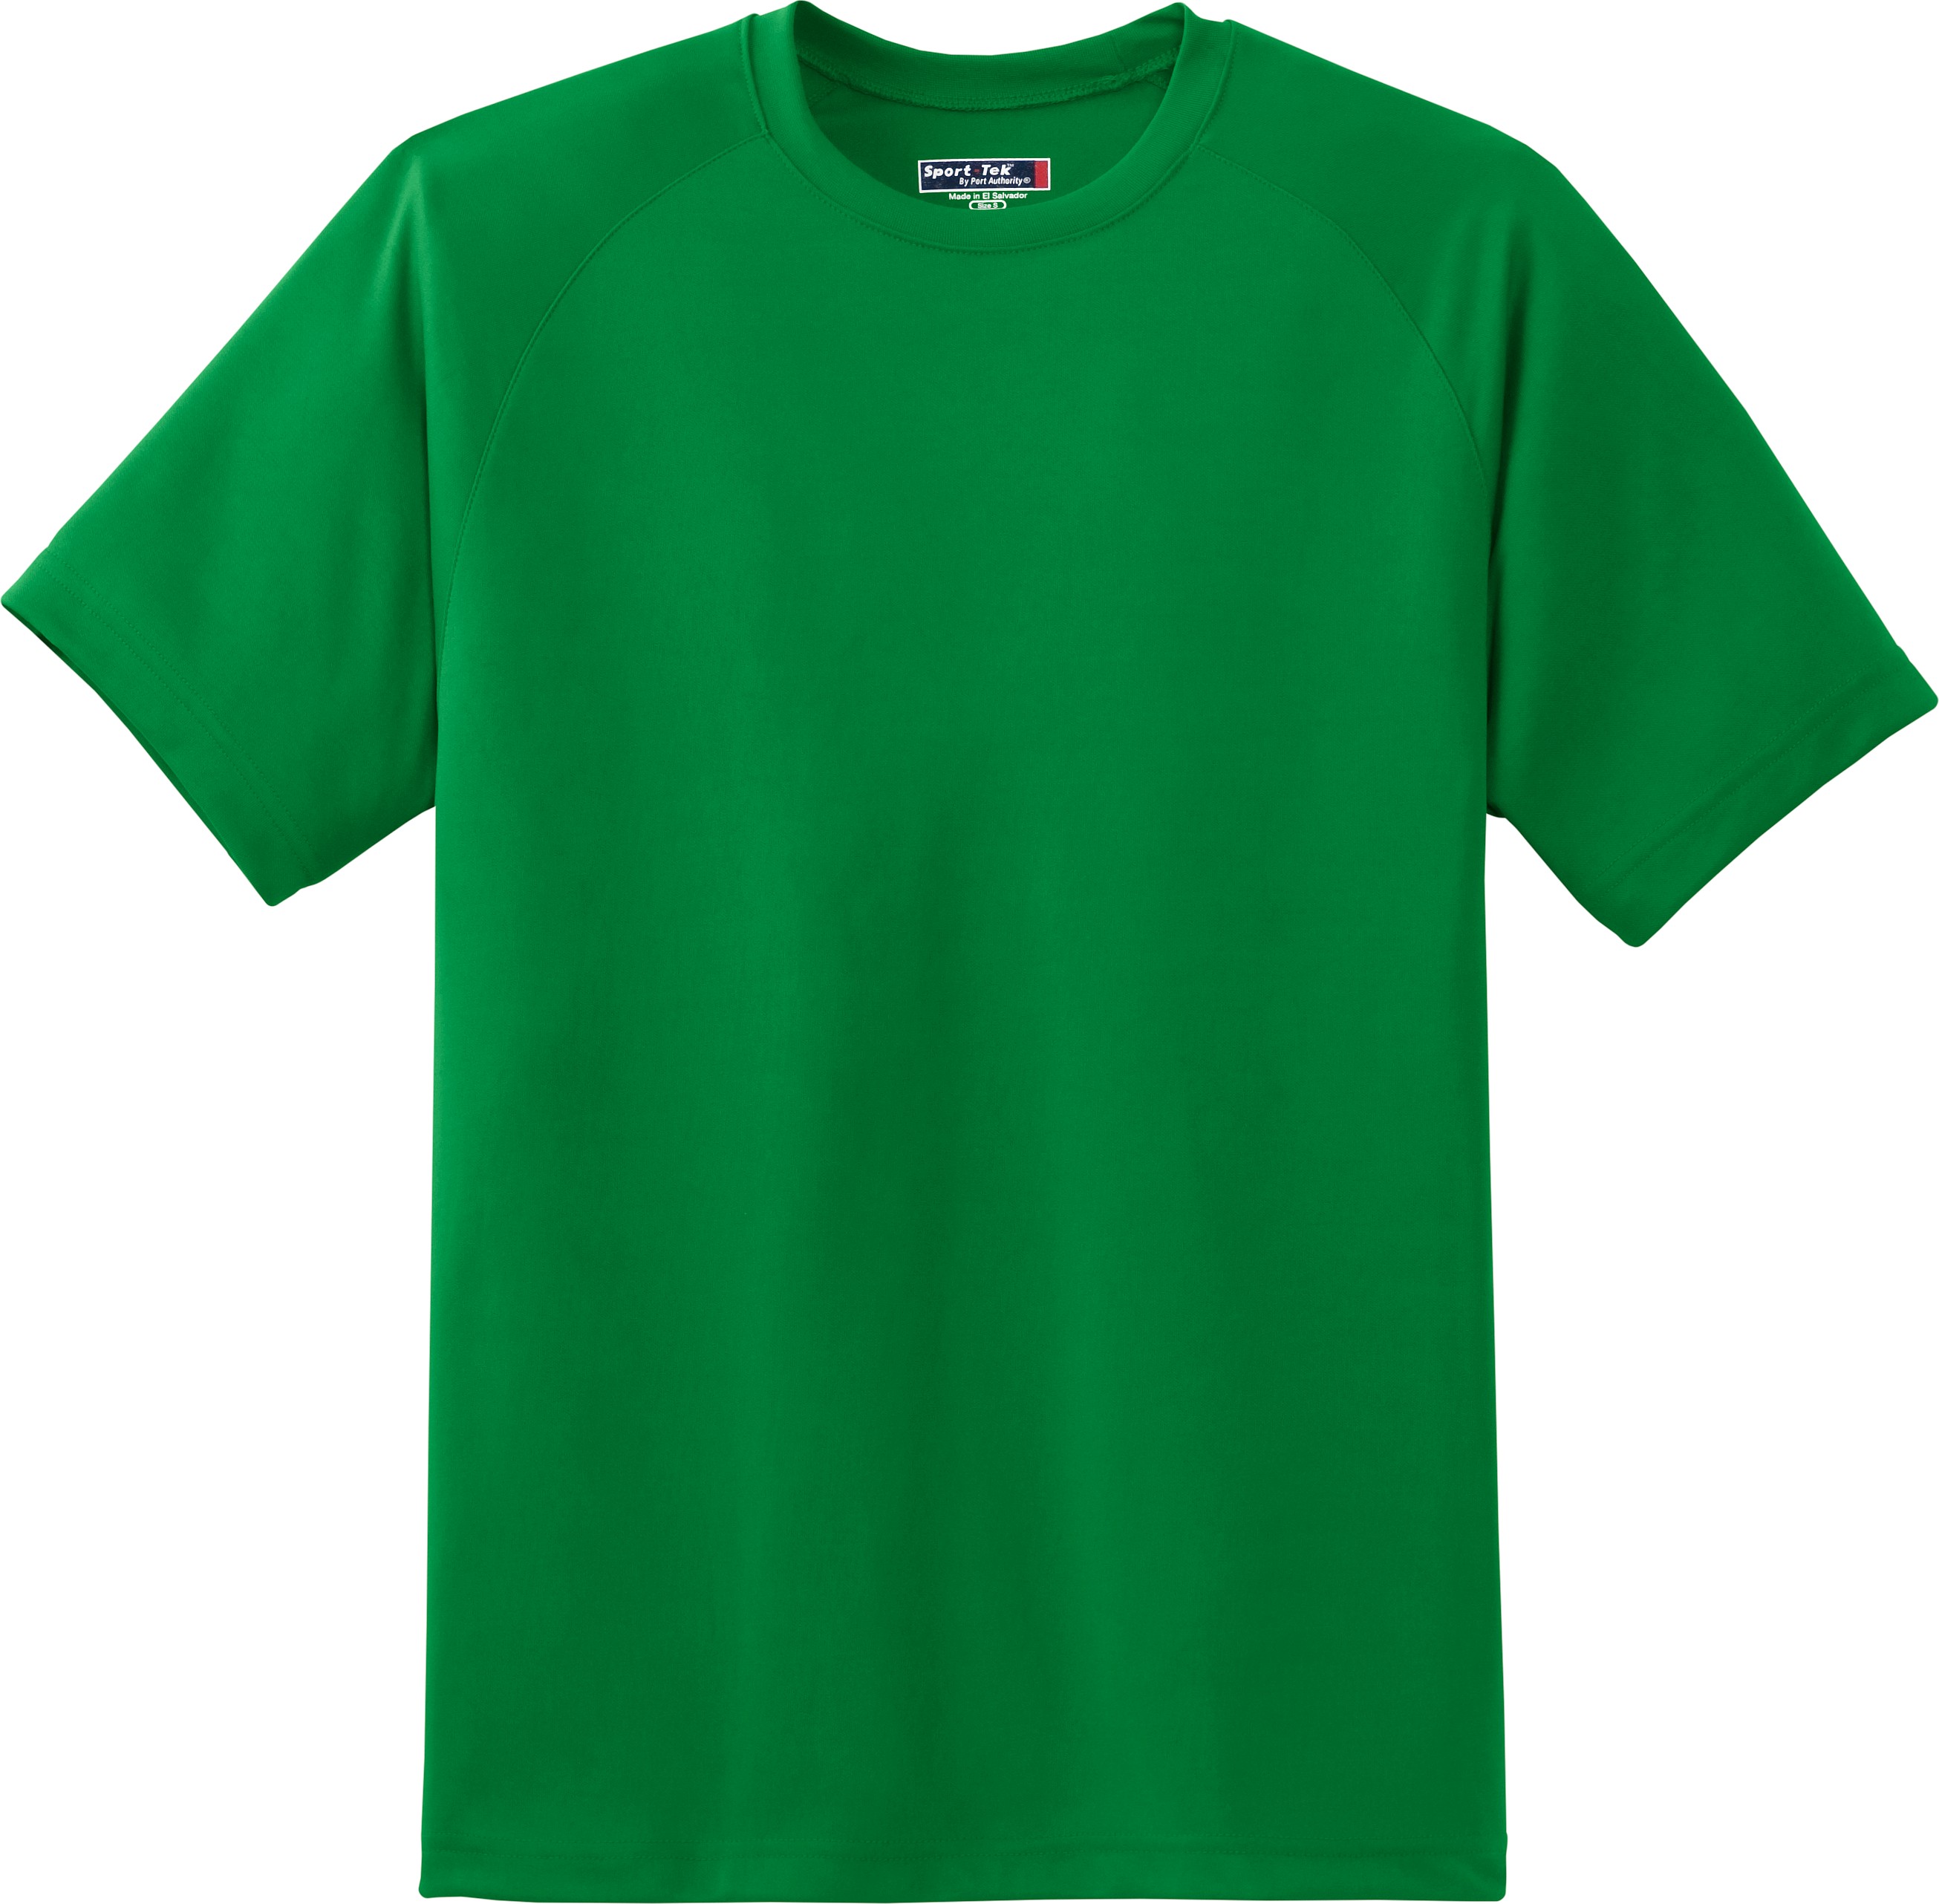 T-shirt-green - inikweb.com - ClipArt Best - ClipArt Best